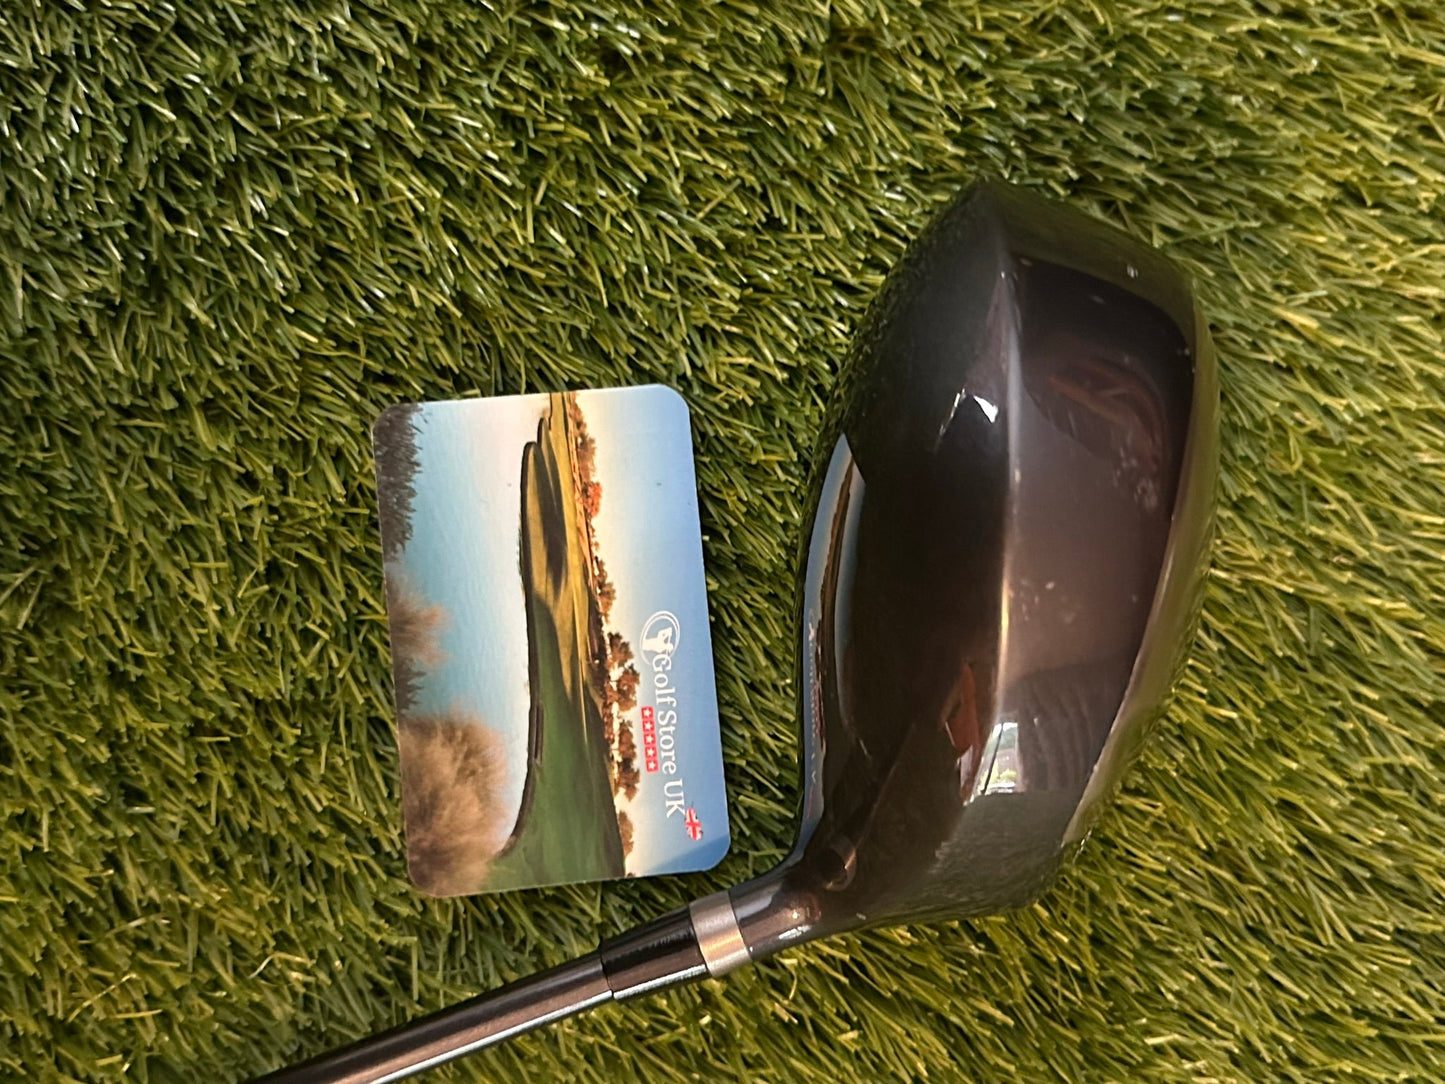 B-Square Titanium 11.5 Degree Driver - Golf Store UK